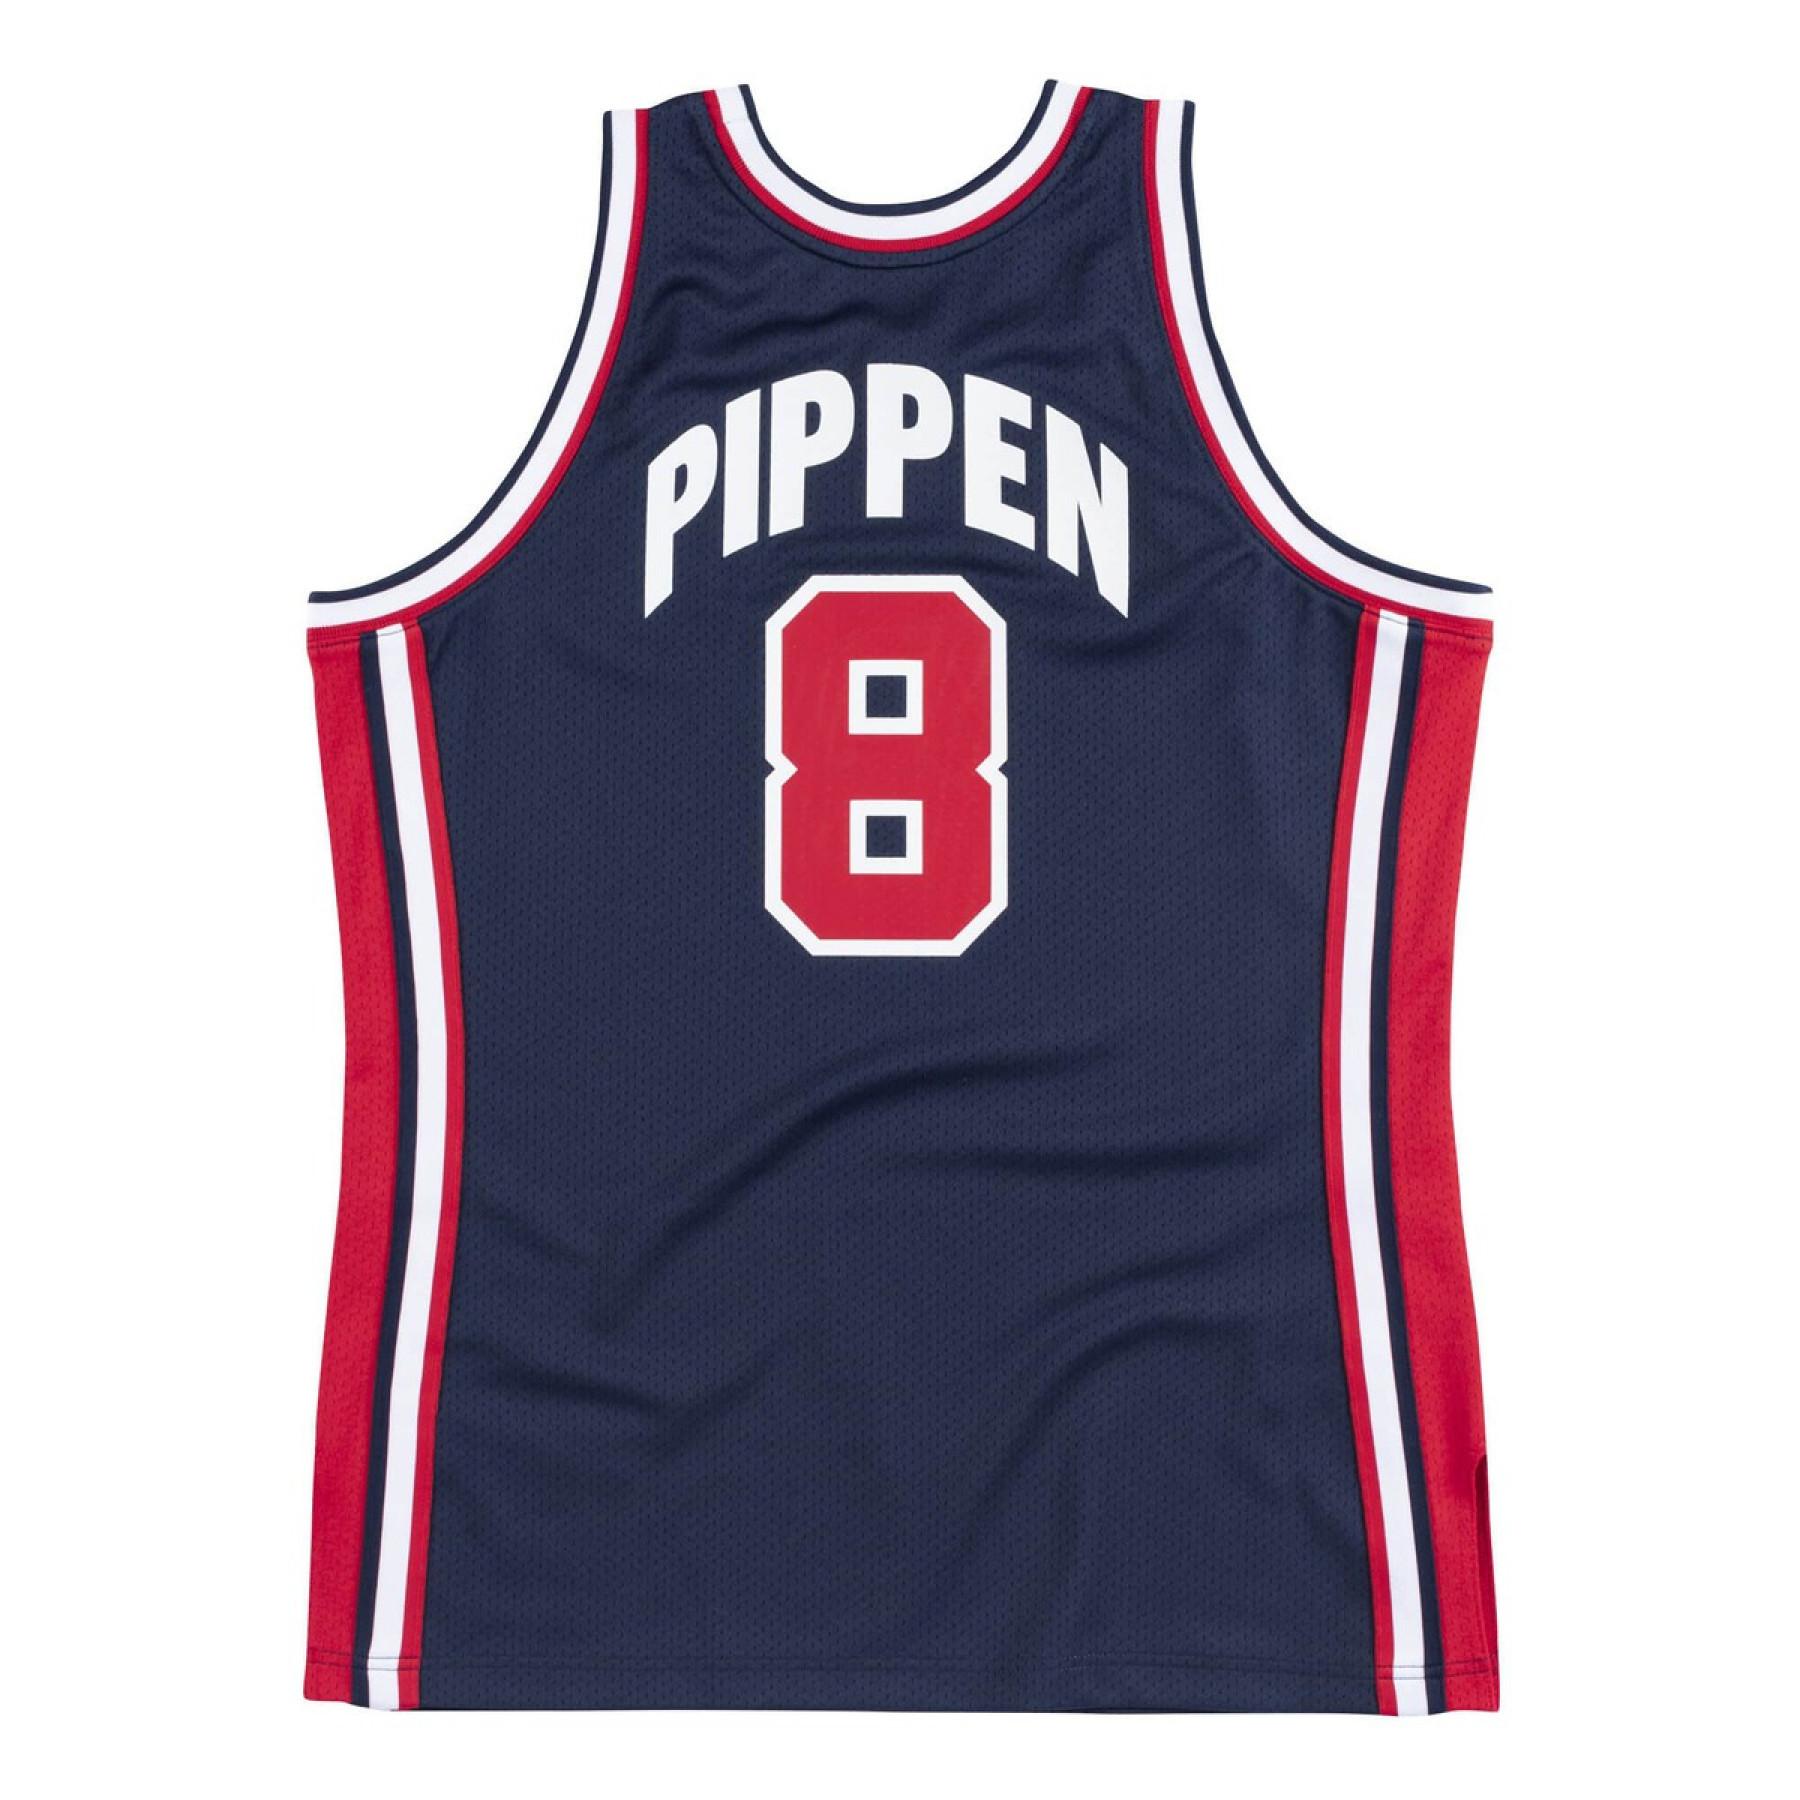 Authentic team jersey USA nba Scottie Pippen